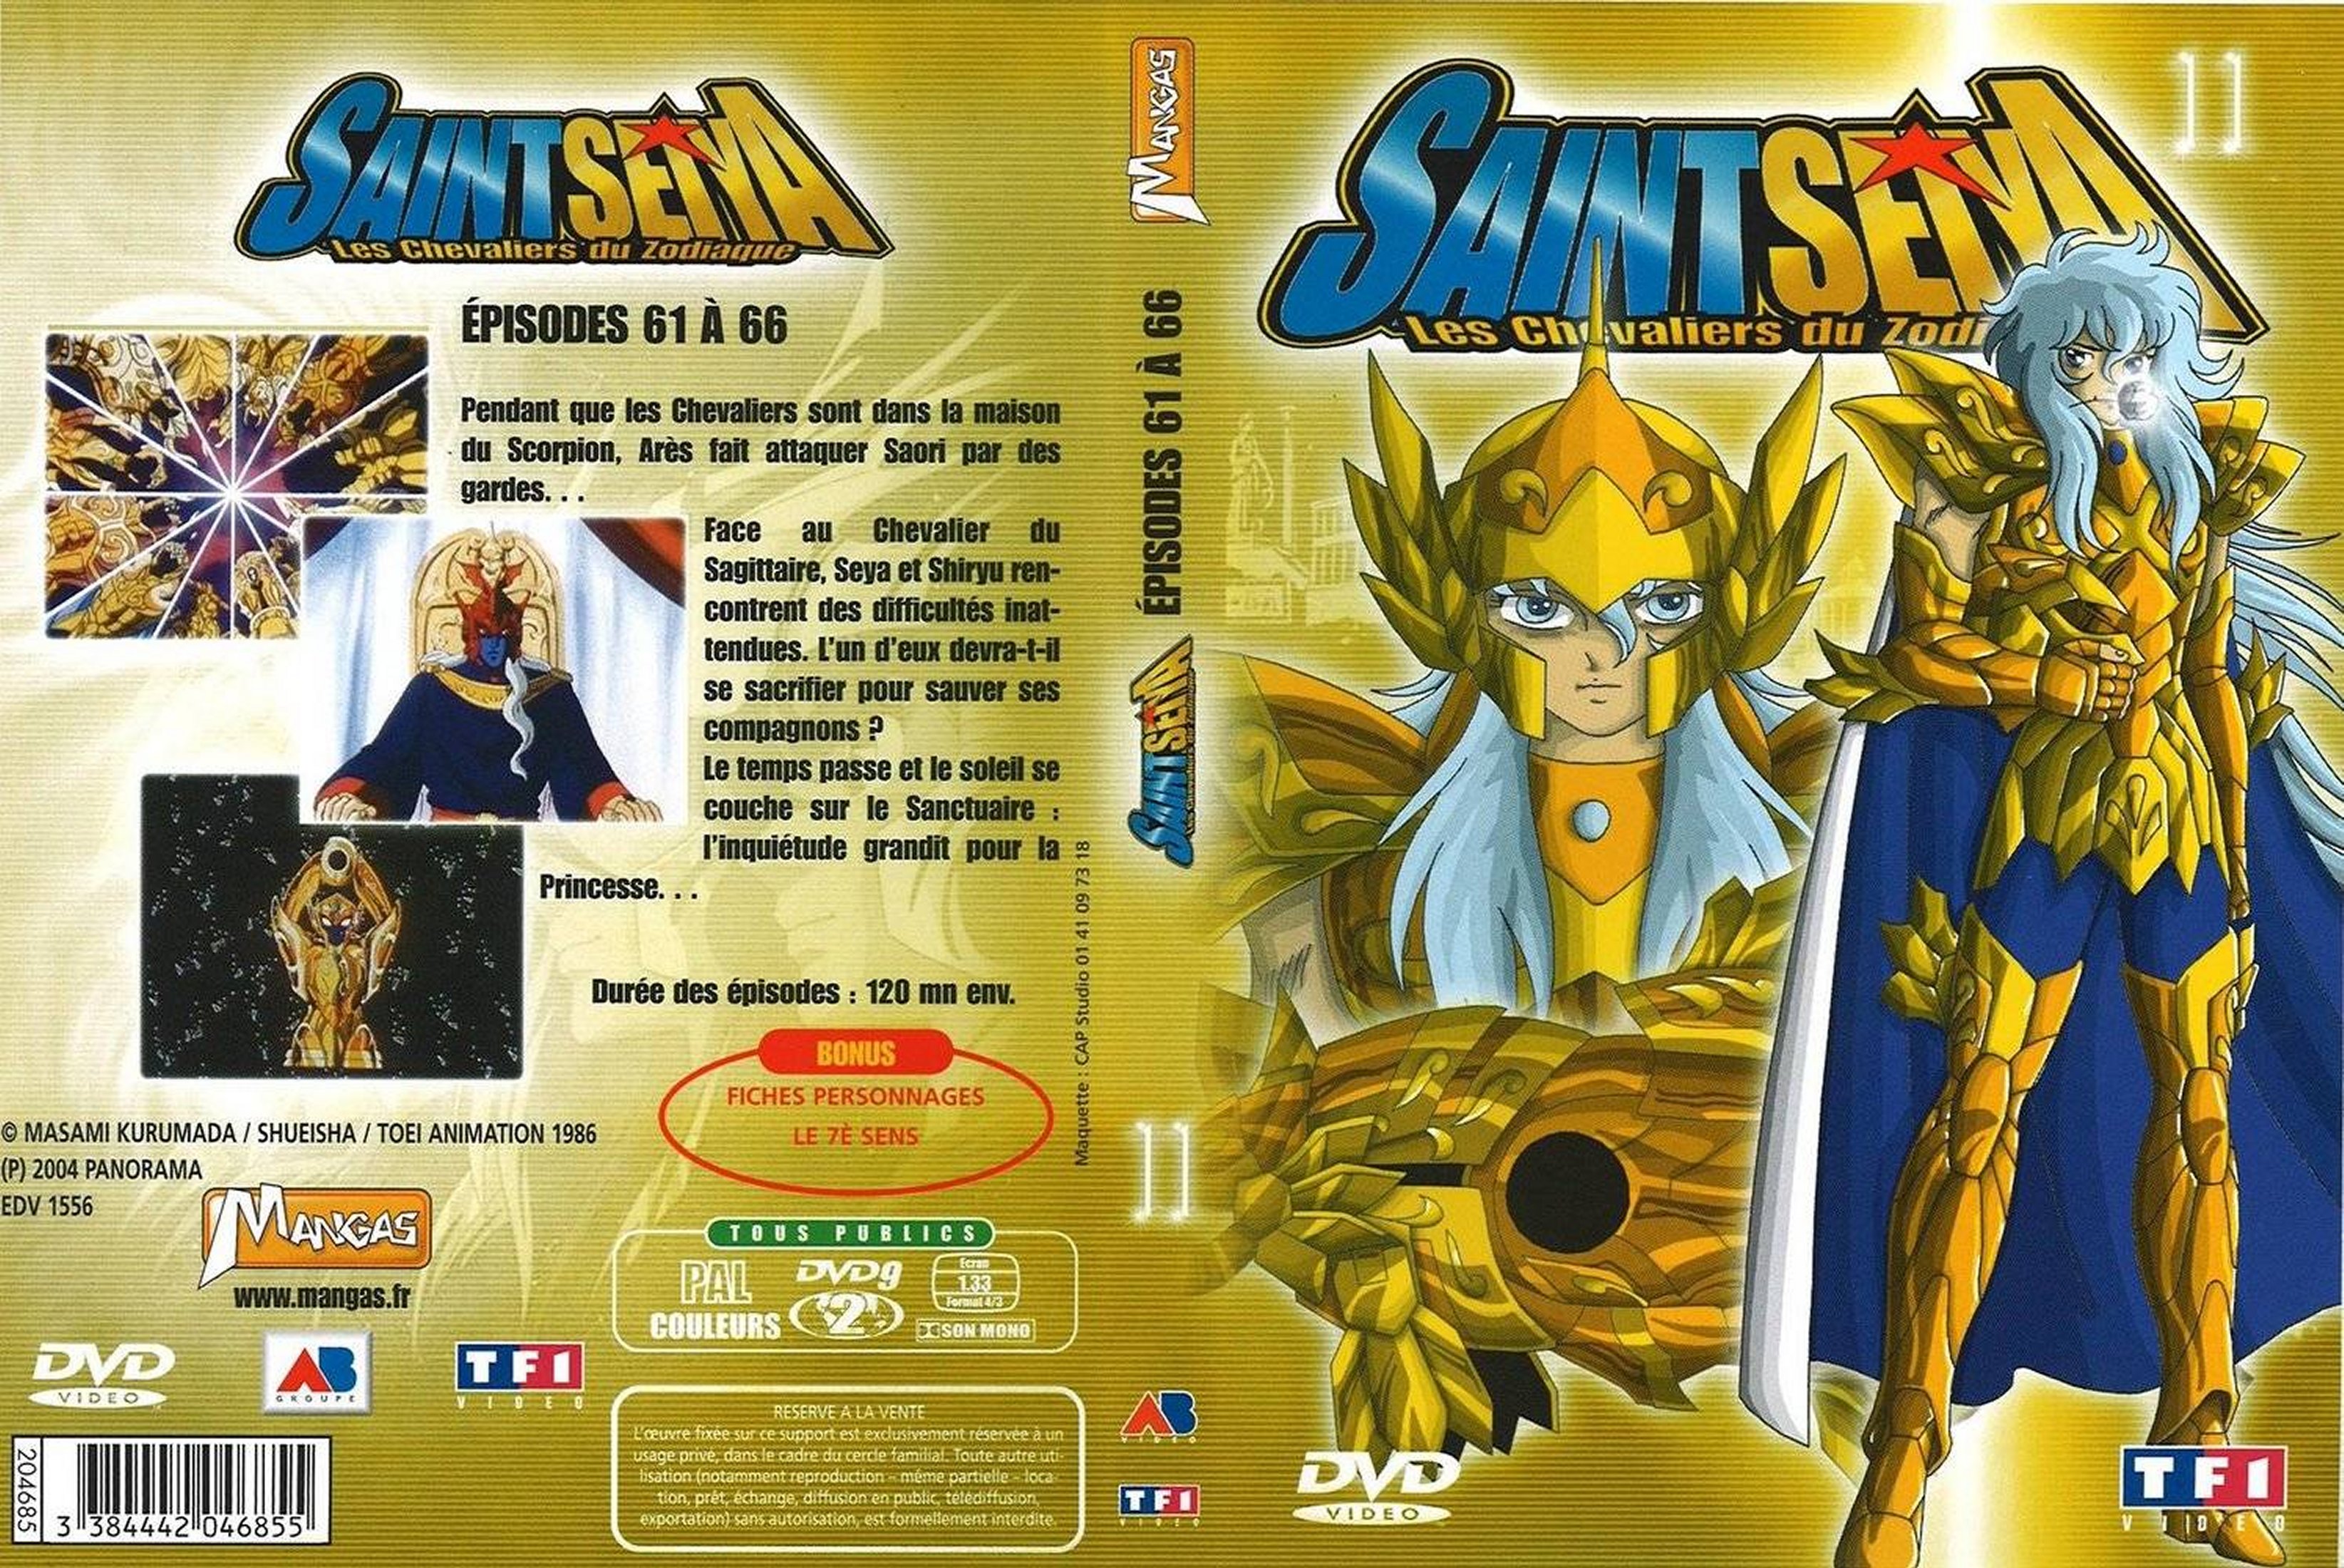 Jaquette DVD Saint Seiya vol 11